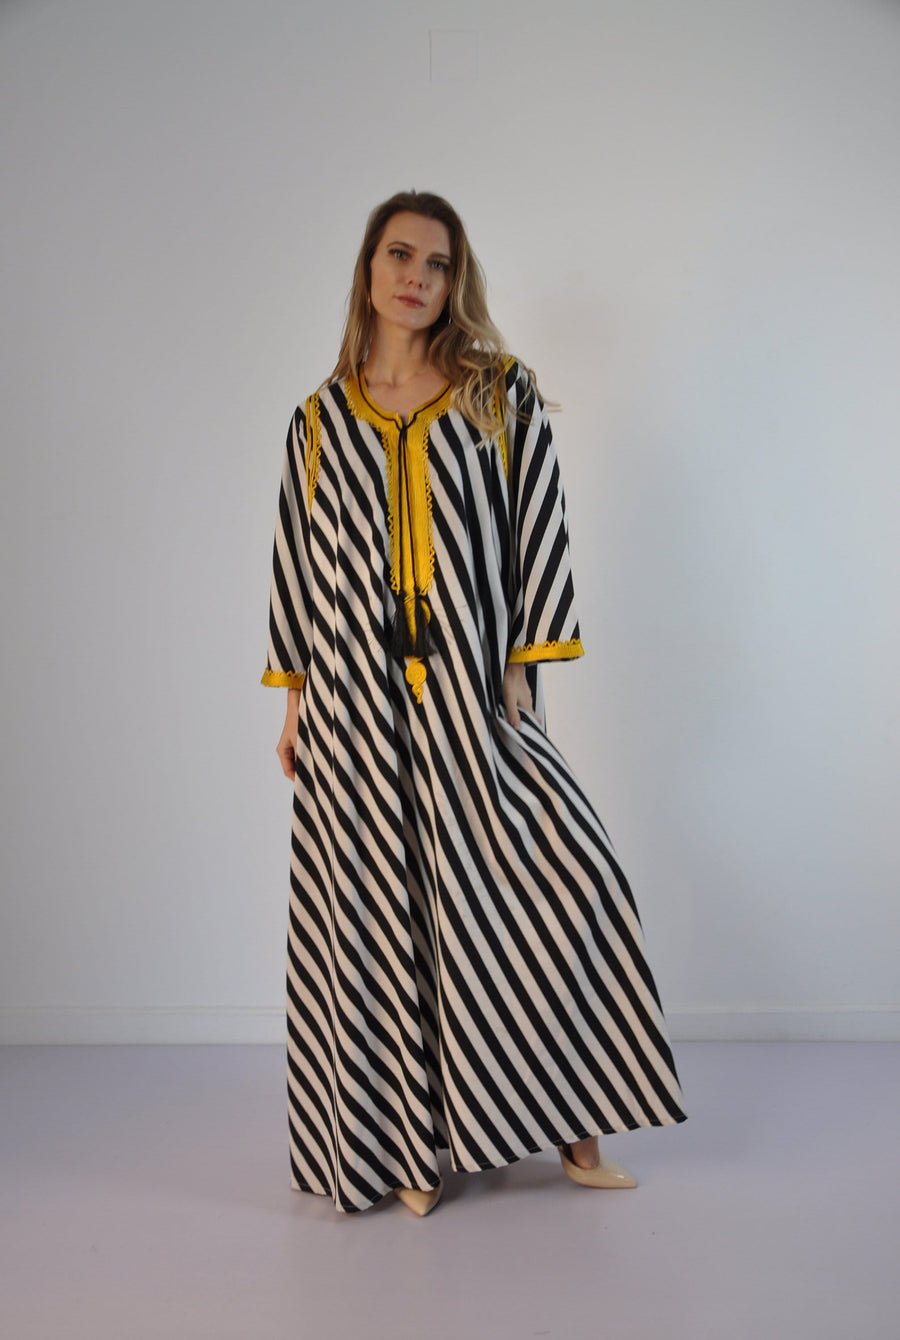 Black Striped Elegant gold embroidered Kaftan dress, Bohemian Kaftan, Egyptian cotton. Gala, Elegant, Arabic Dress. Free size S to XL